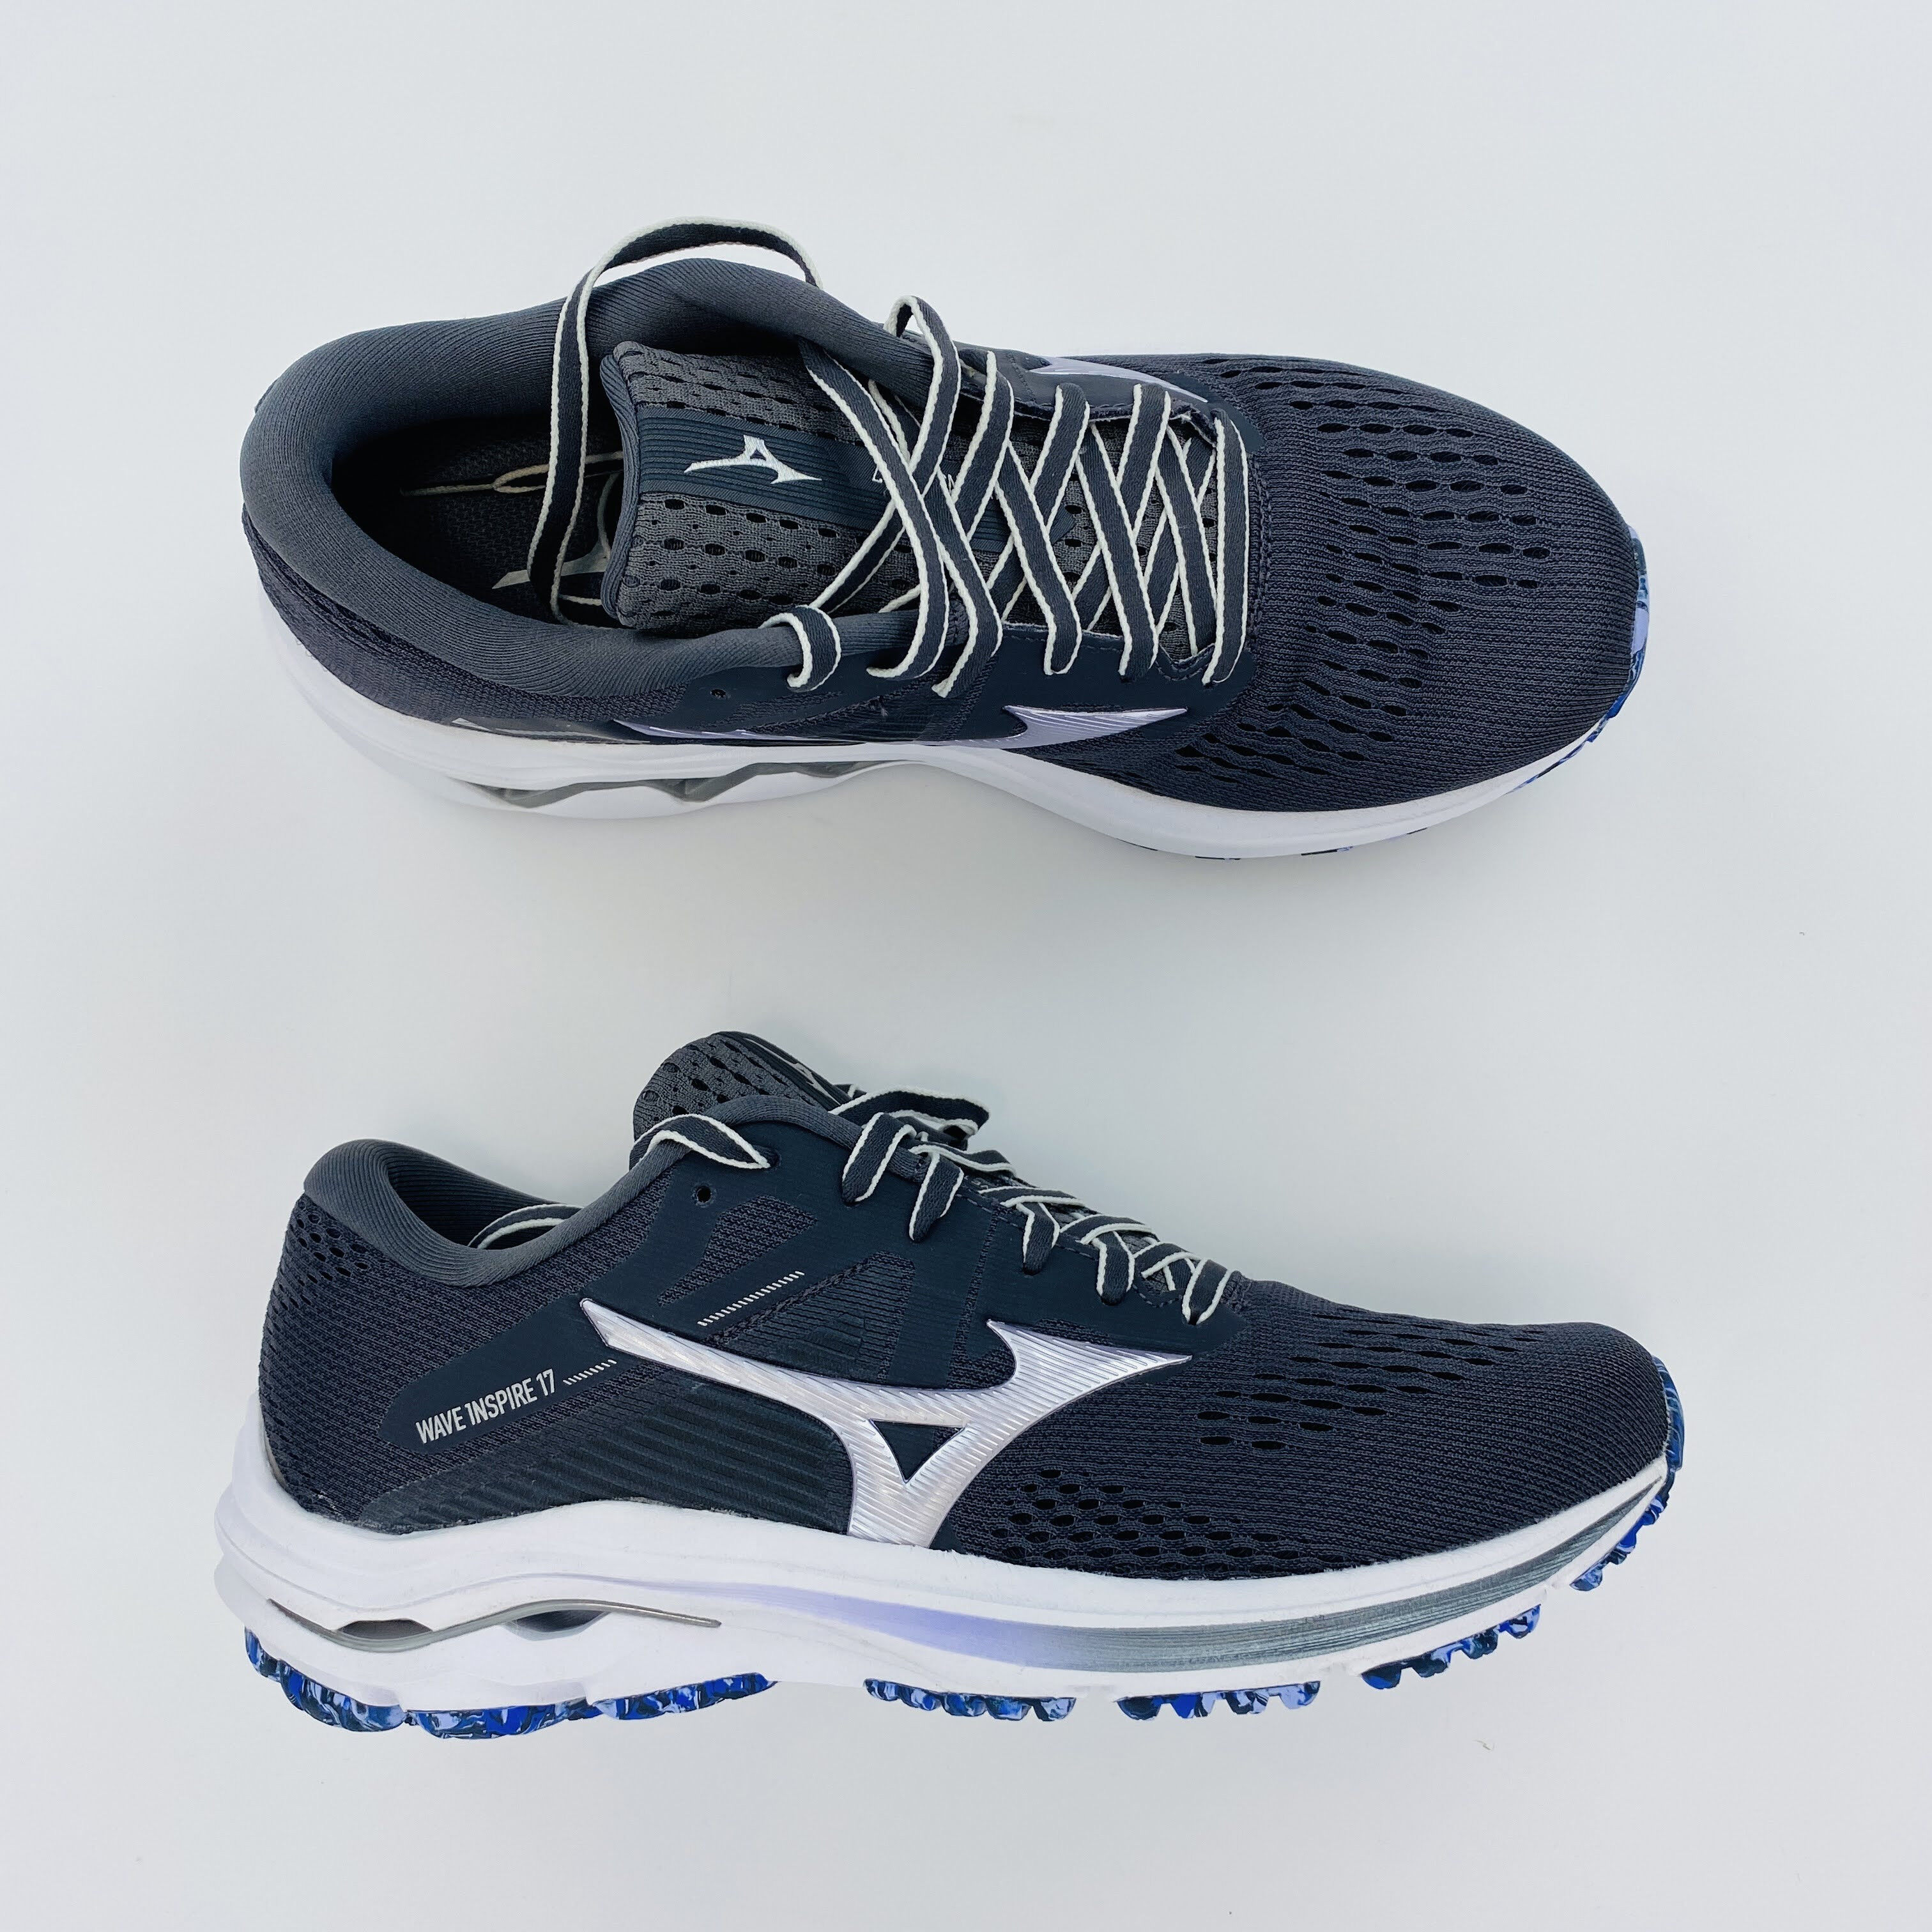 Nike Lunarglide 8 - Seconde main Chaussures running femme - Rose - 40.5